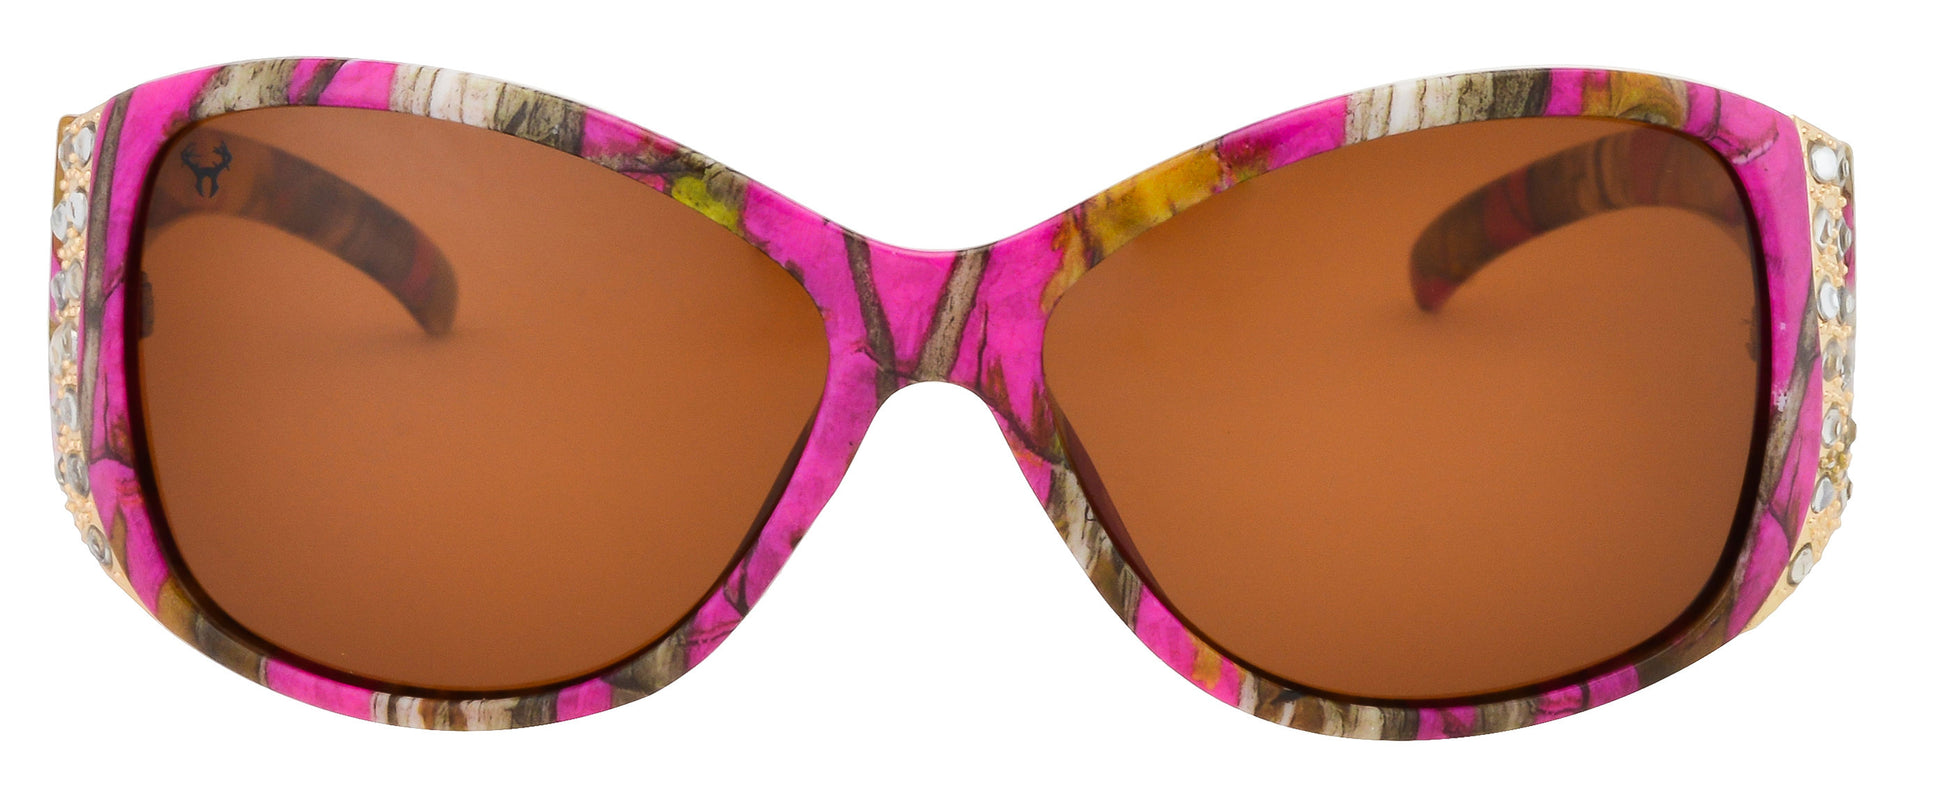 Third image: Hornz Hot Pink Camo Polarized Womens Sunglasses- Hot Pink Camo Frame- Amber Lens